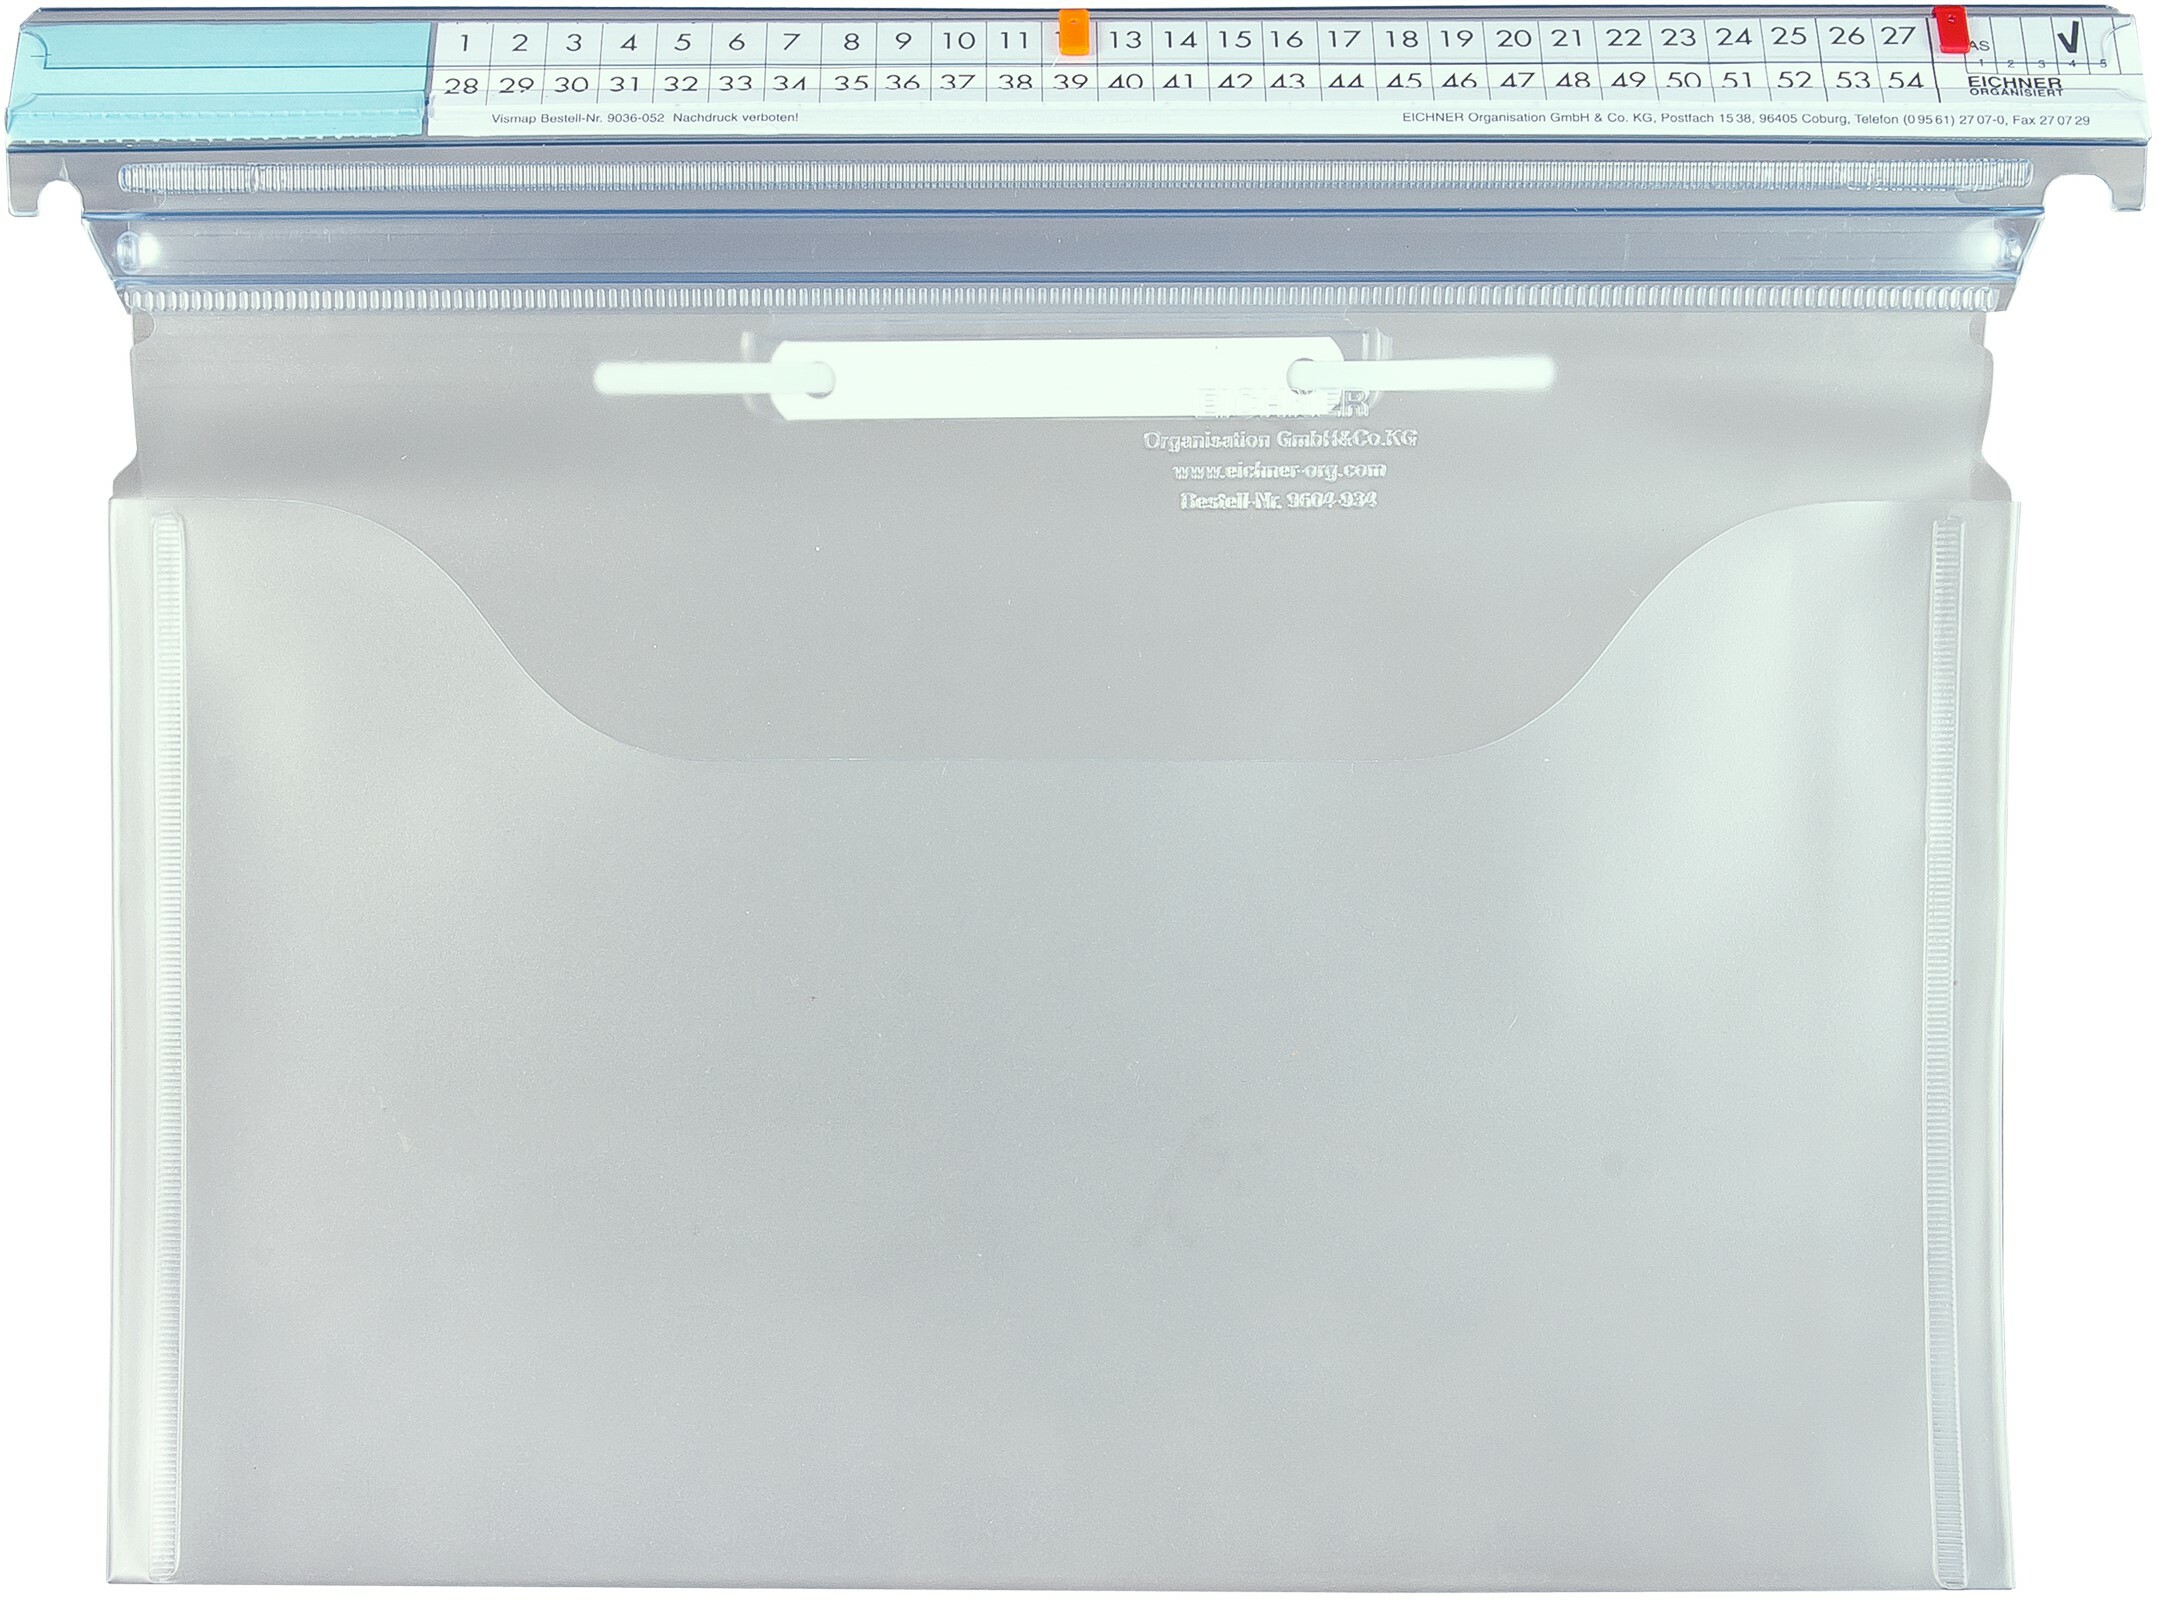 9604-00934 - Terminmappe Visimap DIN A4 quer mit geraeumiger Bogenschnitt-Tasche transparent